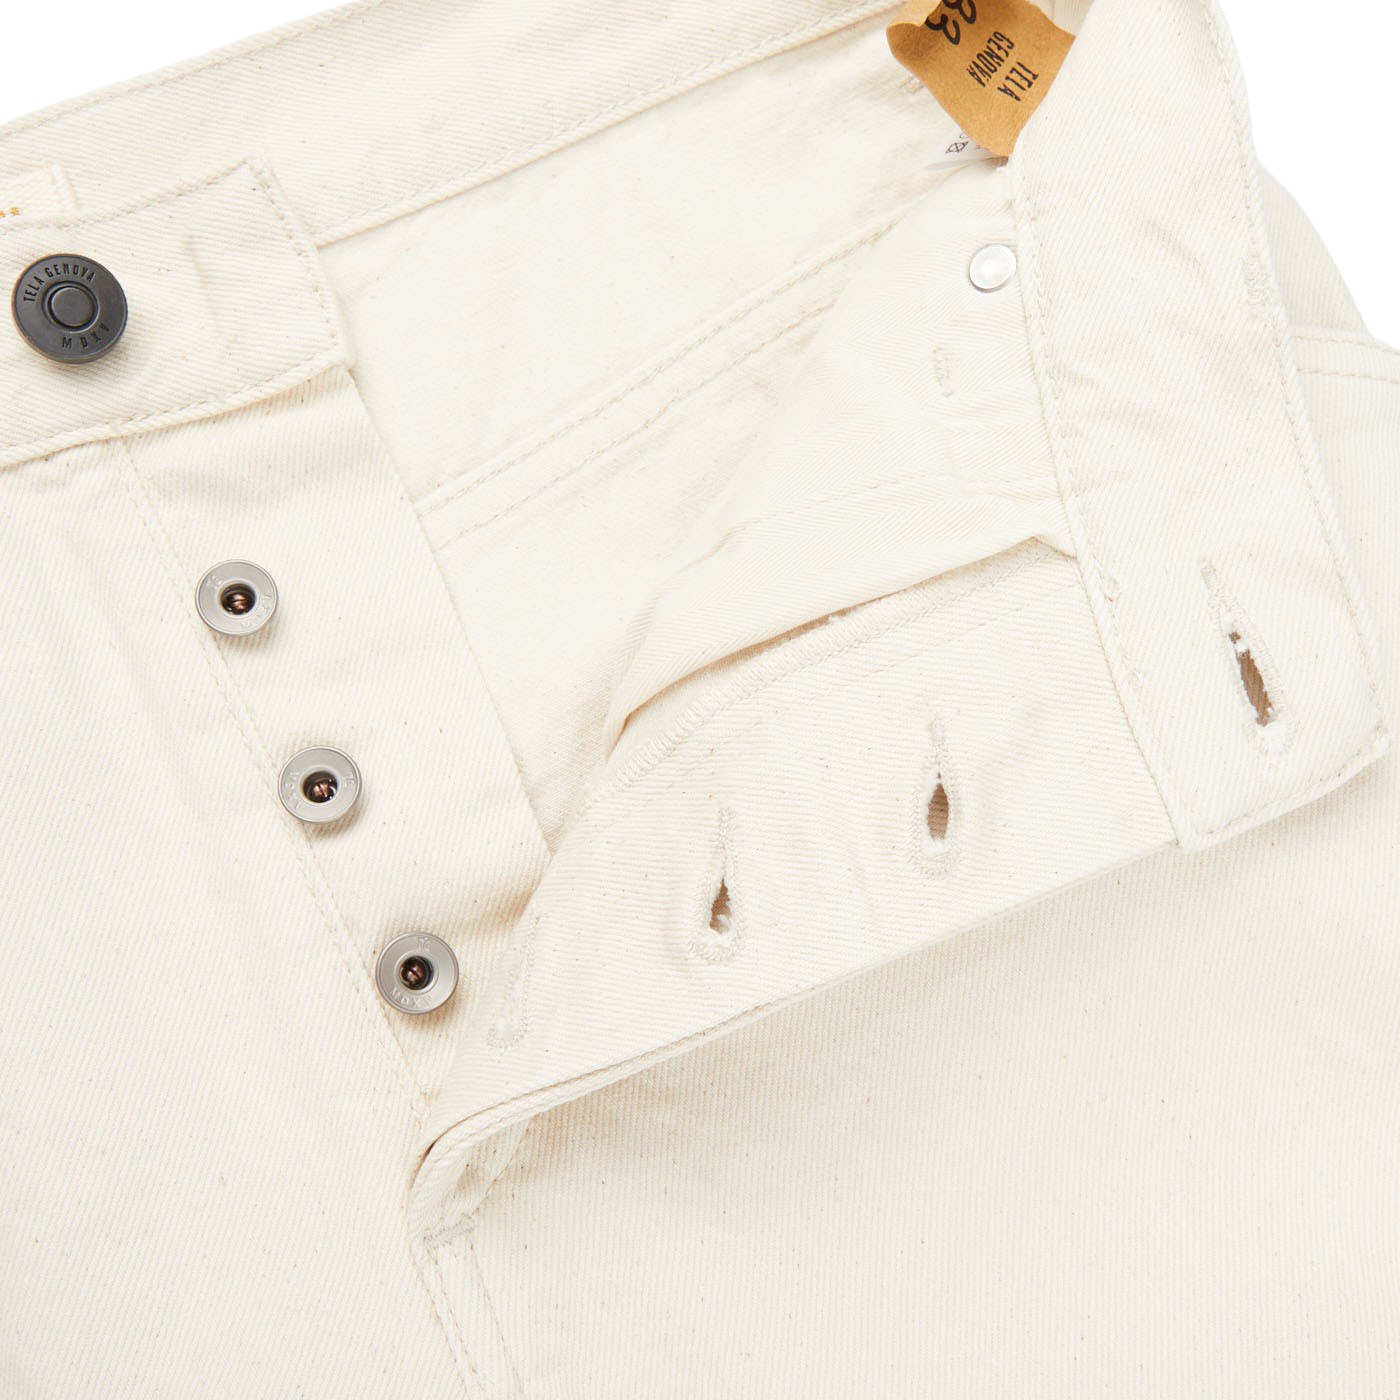 Tela Genova Natural Beige Cotton Selvedge Jeans Zipper